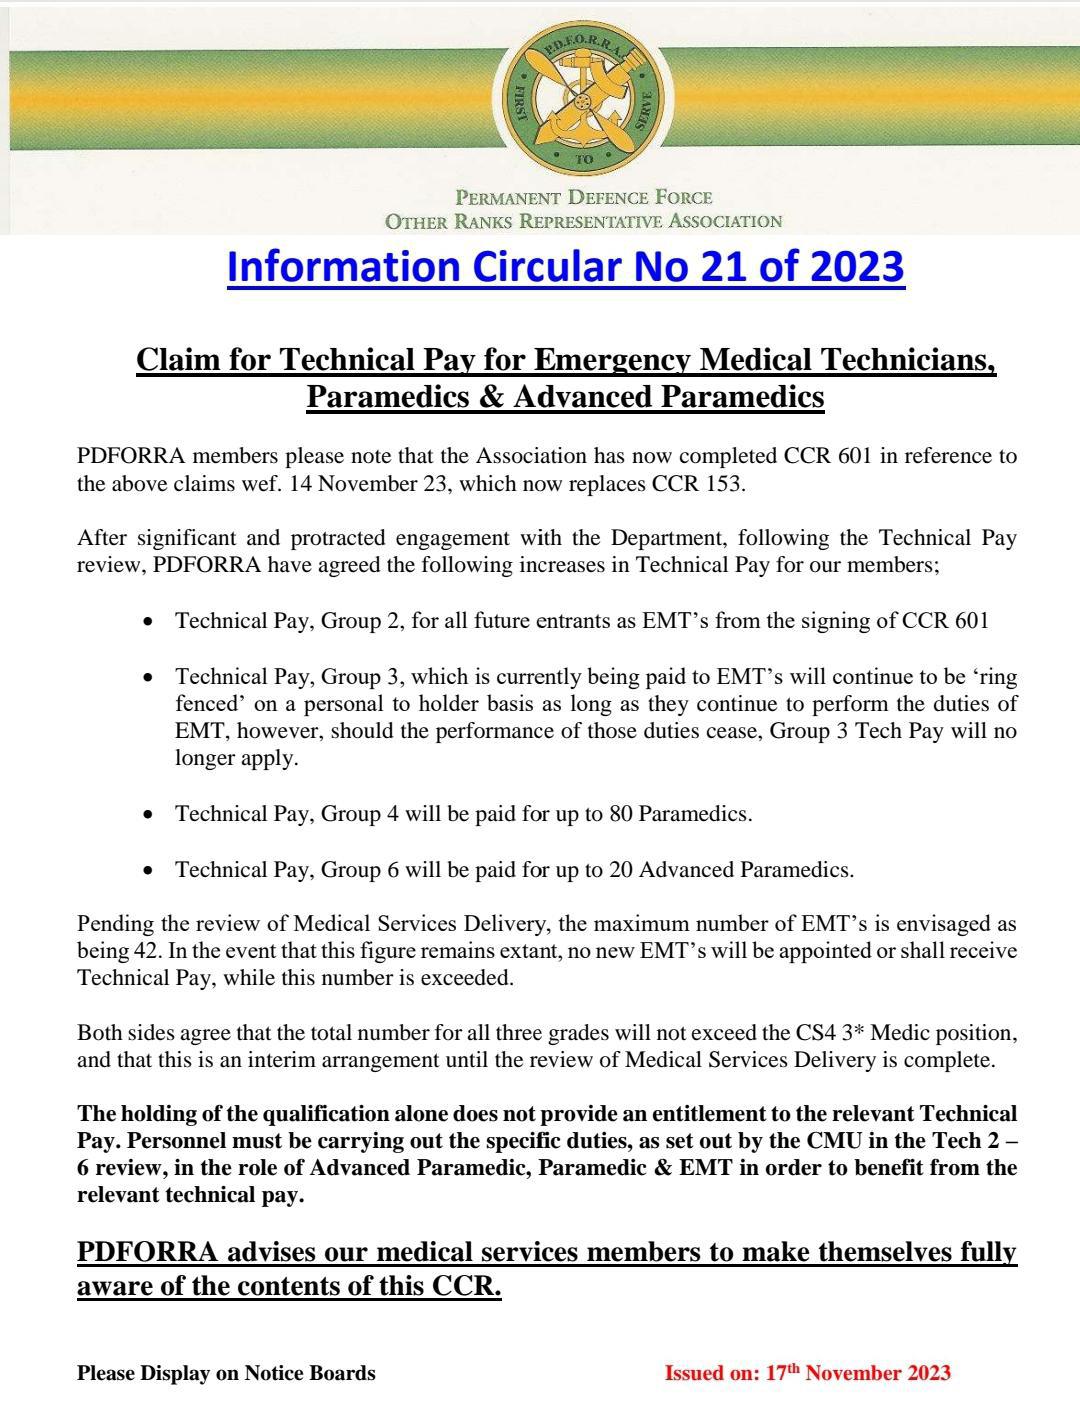 Information Circular No 21 of 23 - CCR 601 Claim for Technical Pay for EMT Paramedics and Advanced Paramedics